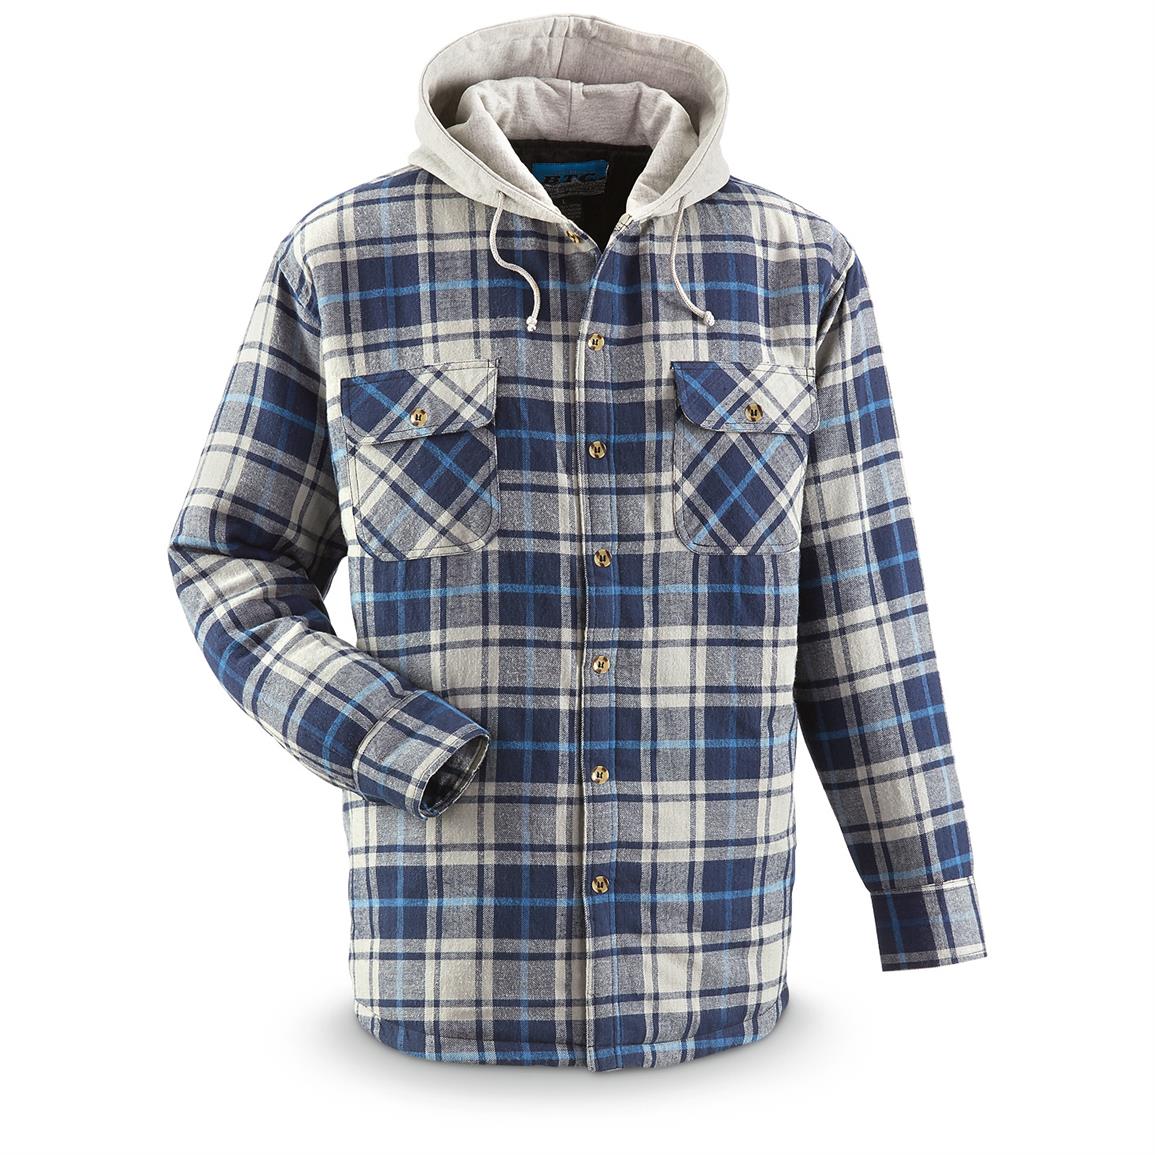 Men's Button Front Sherpa Lined Shirt / Jacket - 665225, Shirts at